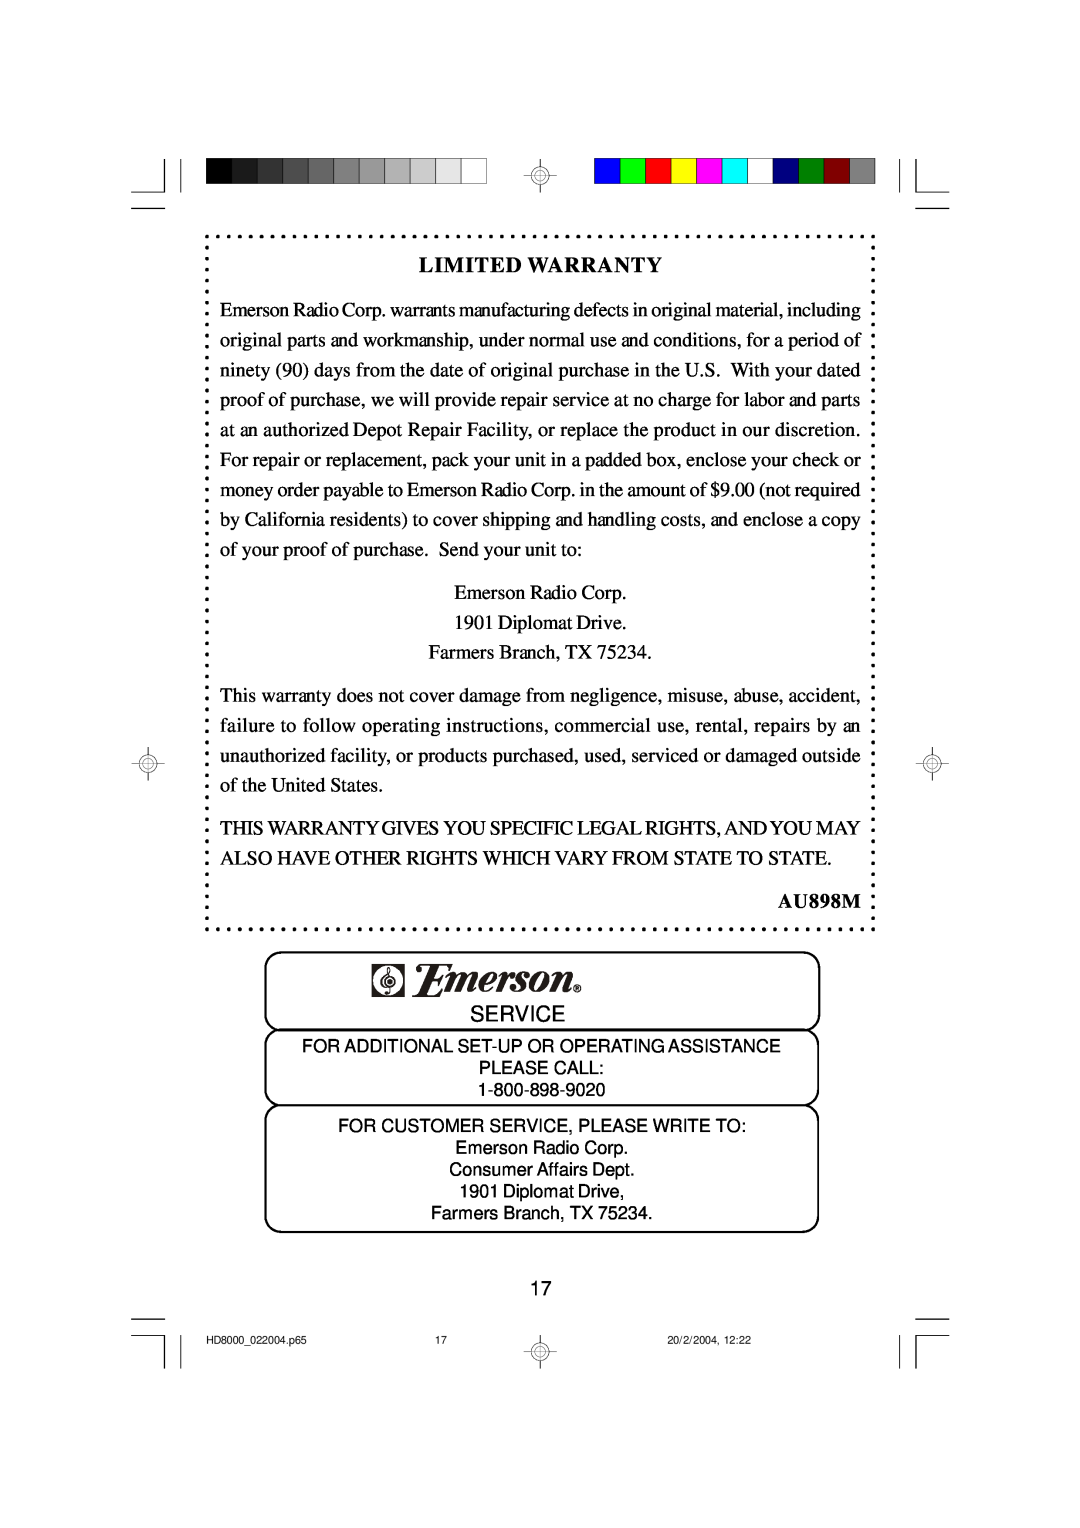 Emerson HD8000 owner manual Service, Limited Warranty, AU898M 